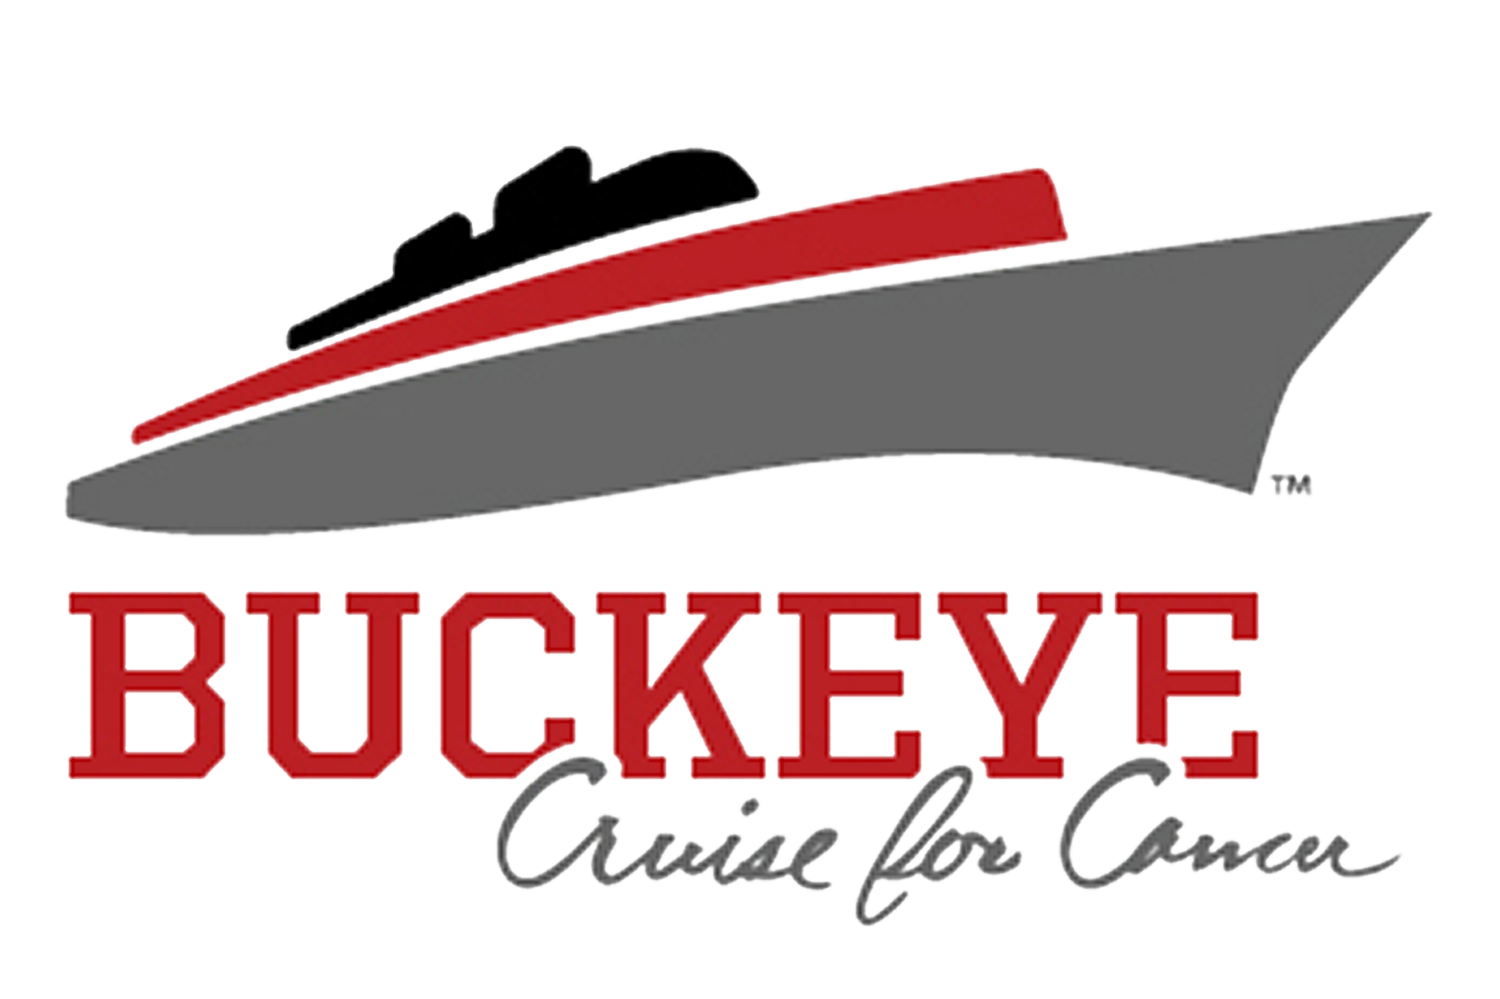 buckeye cruise for cancer the ohio eggfest logo